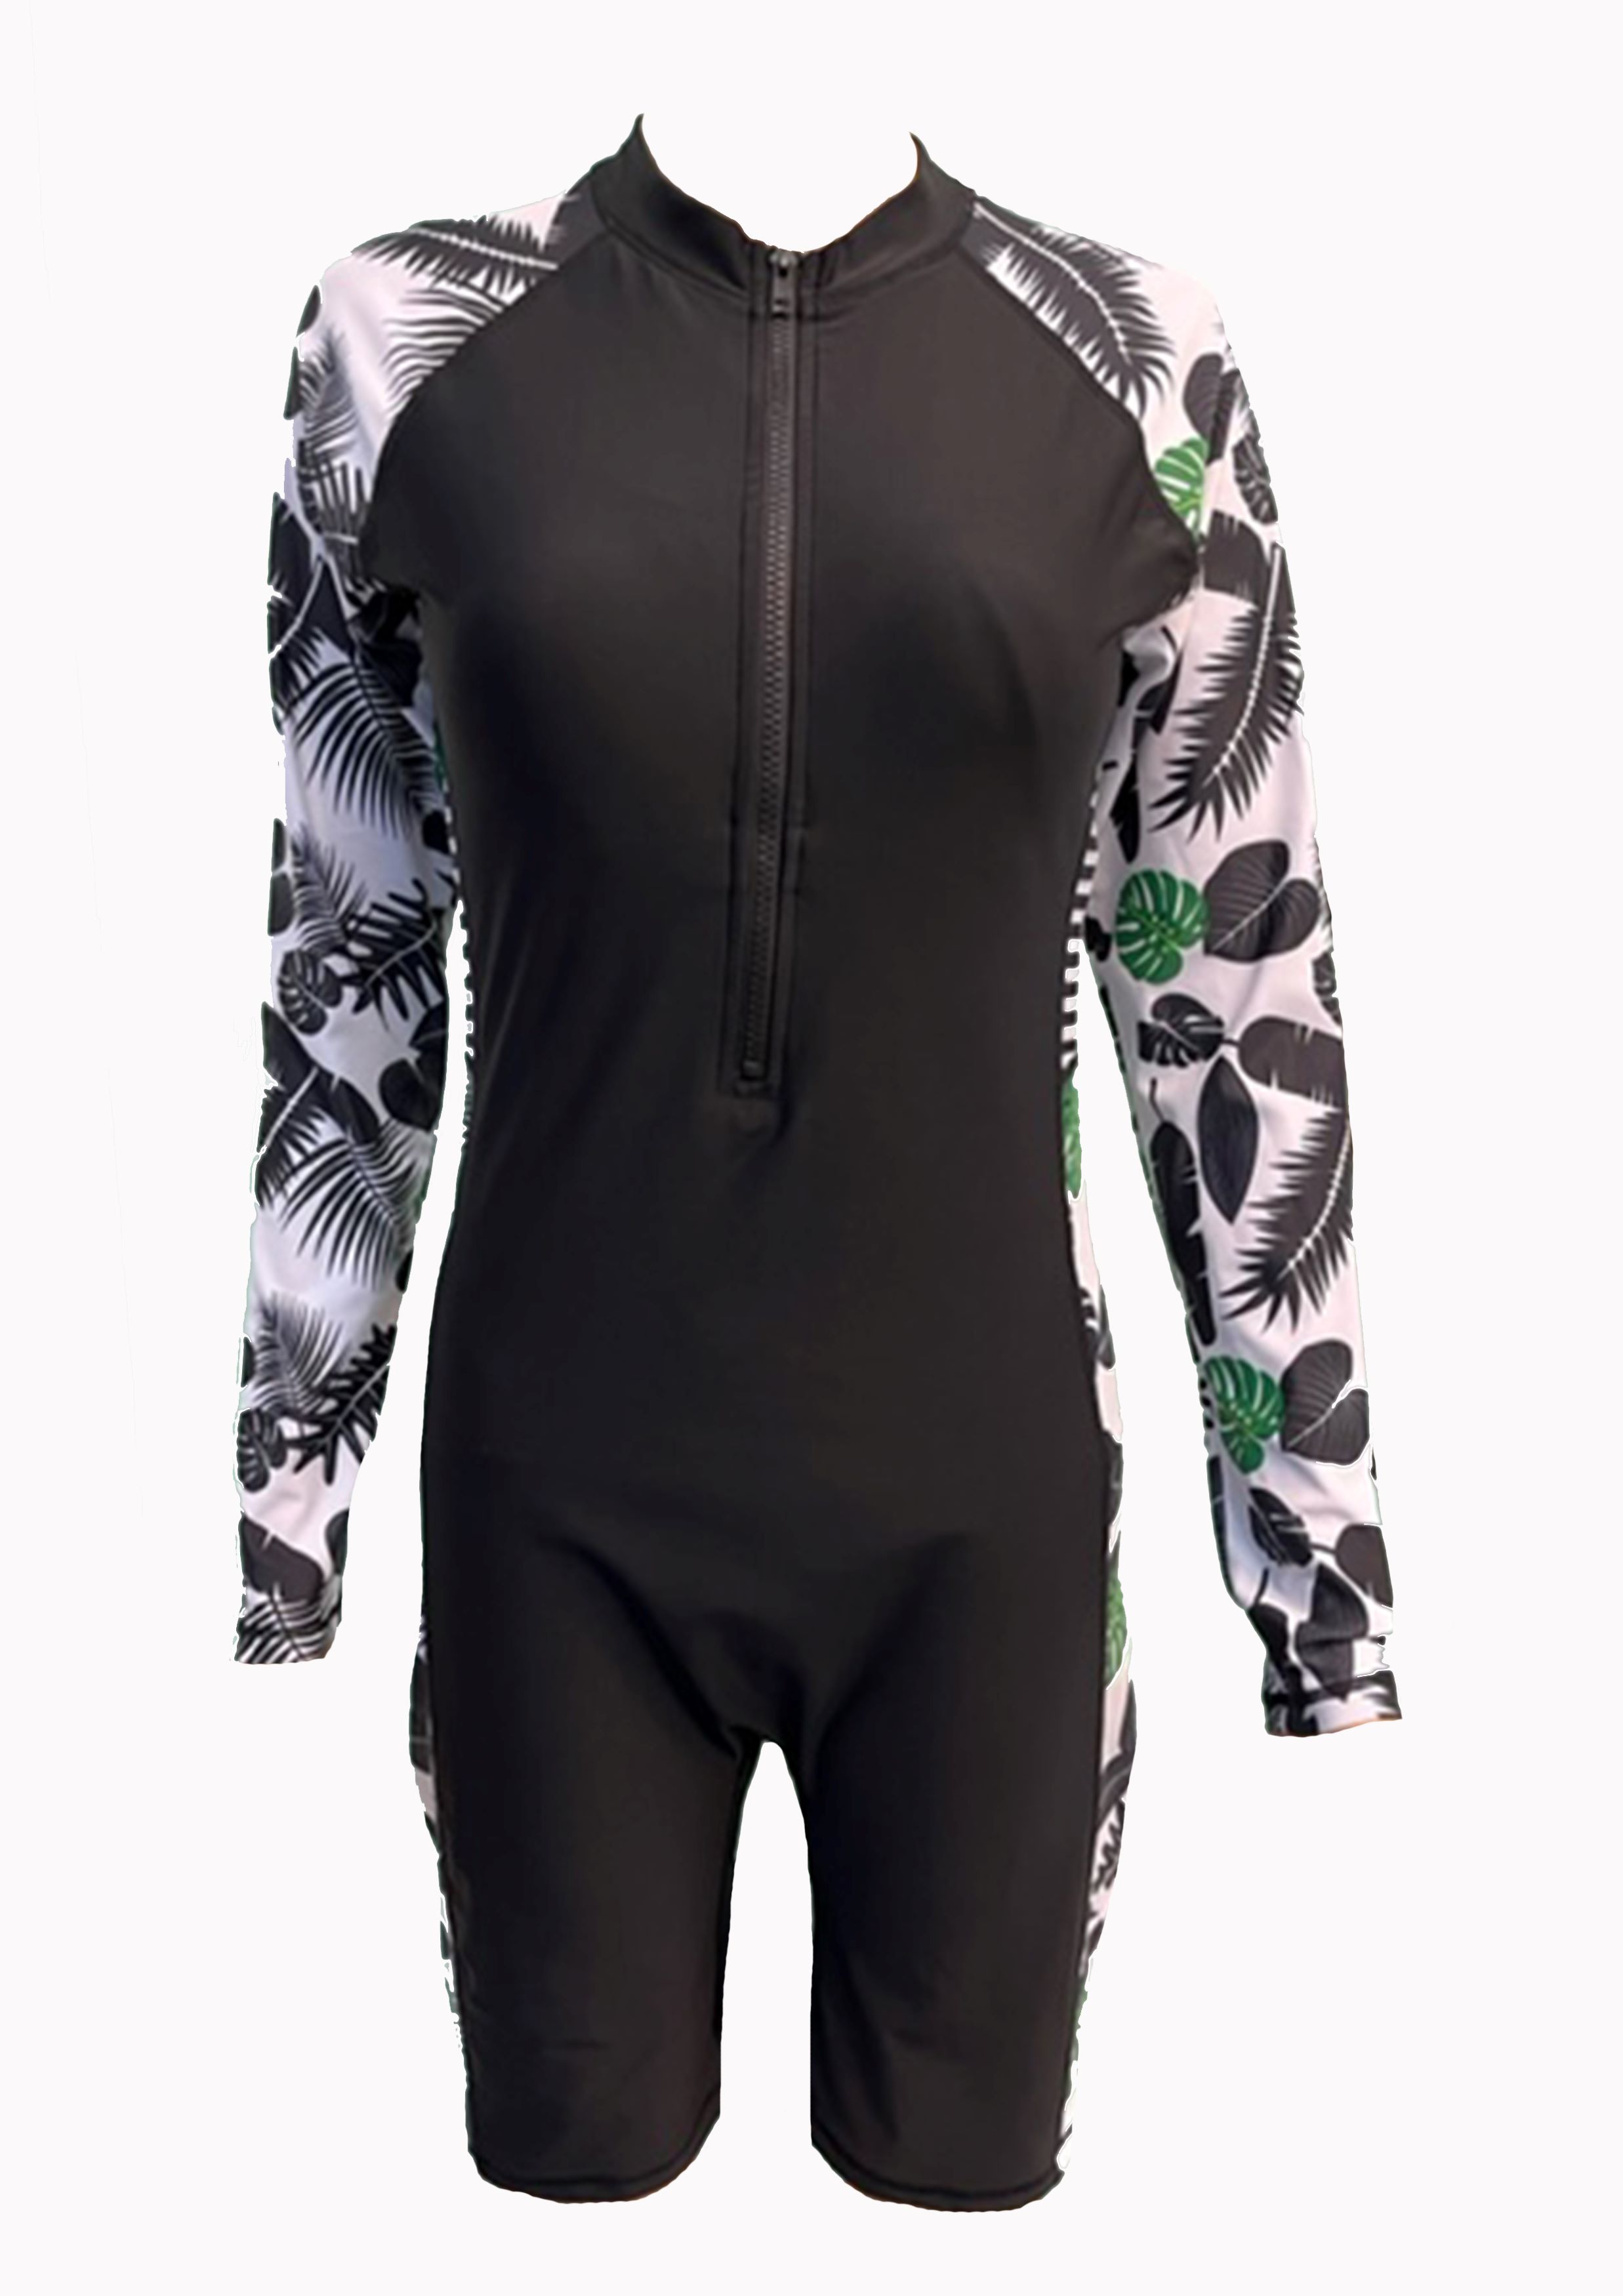 Women's one-piece chlorine-resistant swimsuit Kamiye - Imo Black